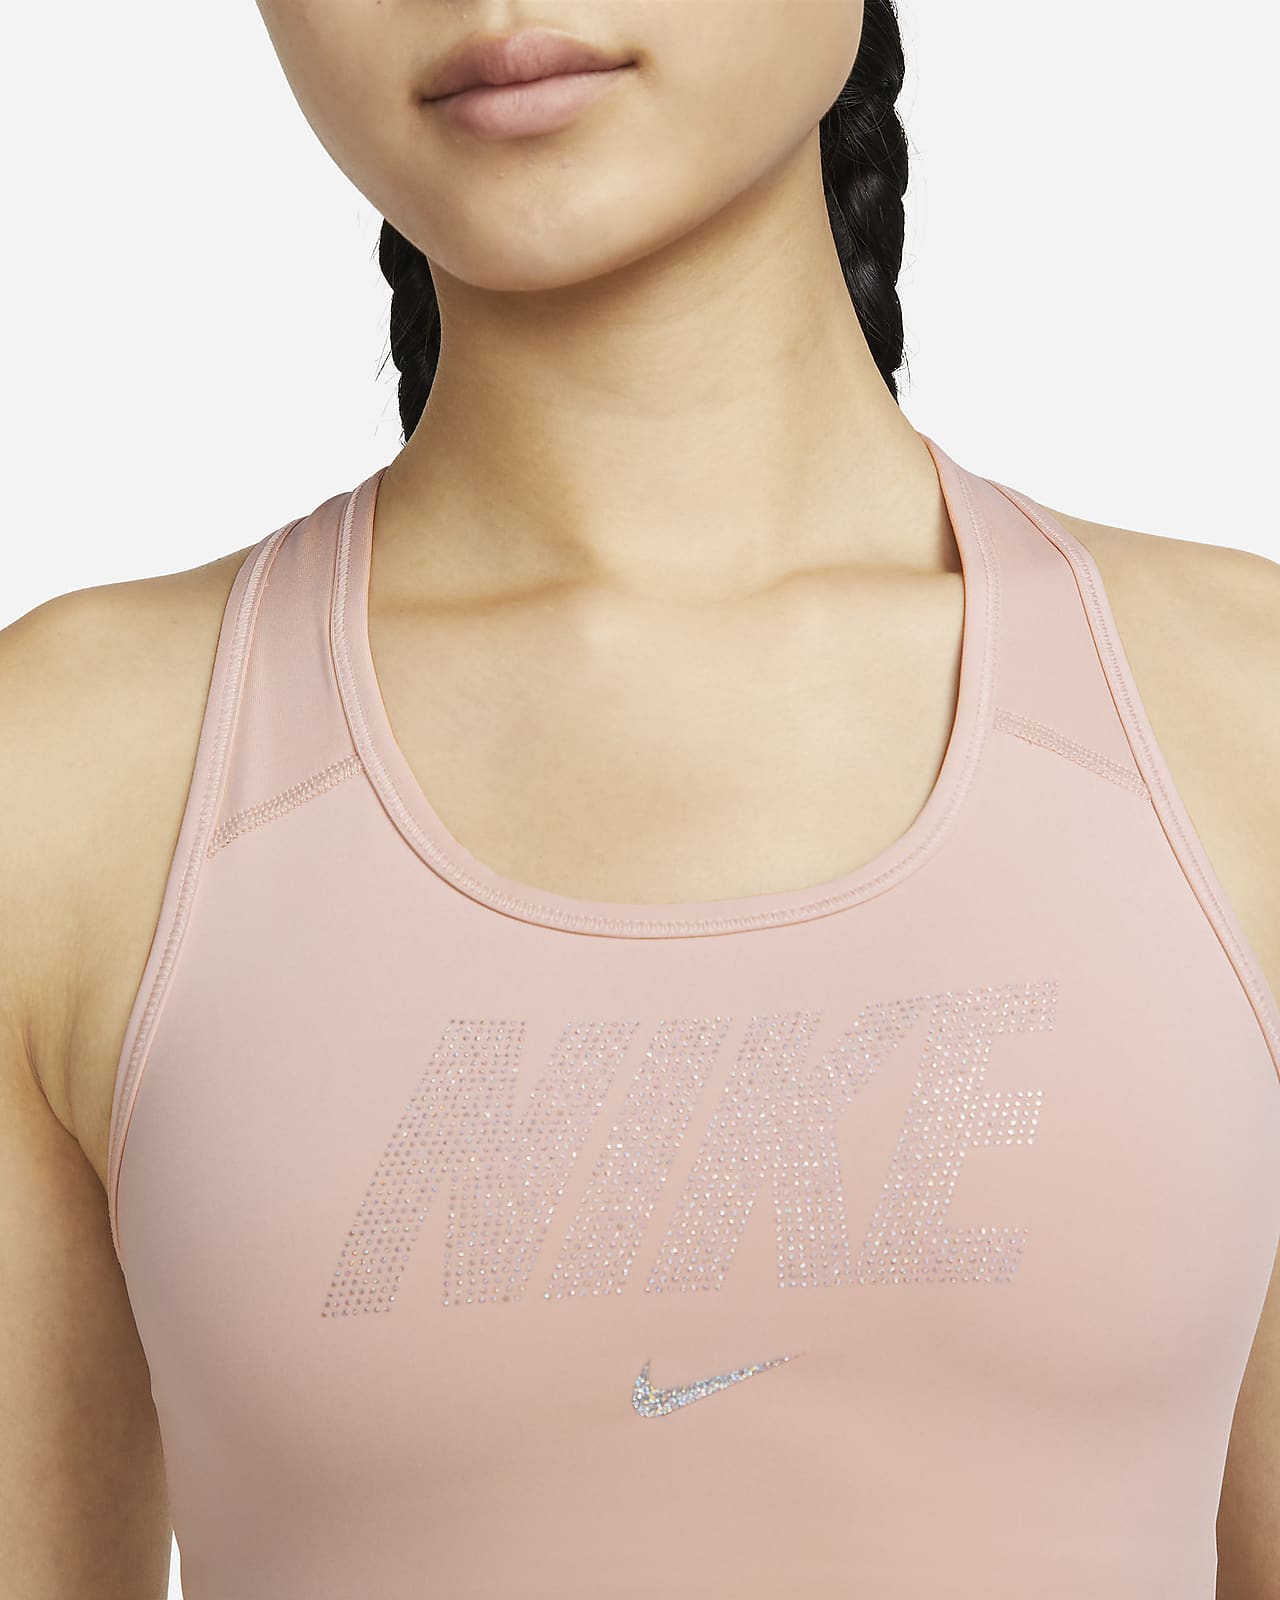  Nike Swoosh Women's Medium-Support Non-Padded Sports